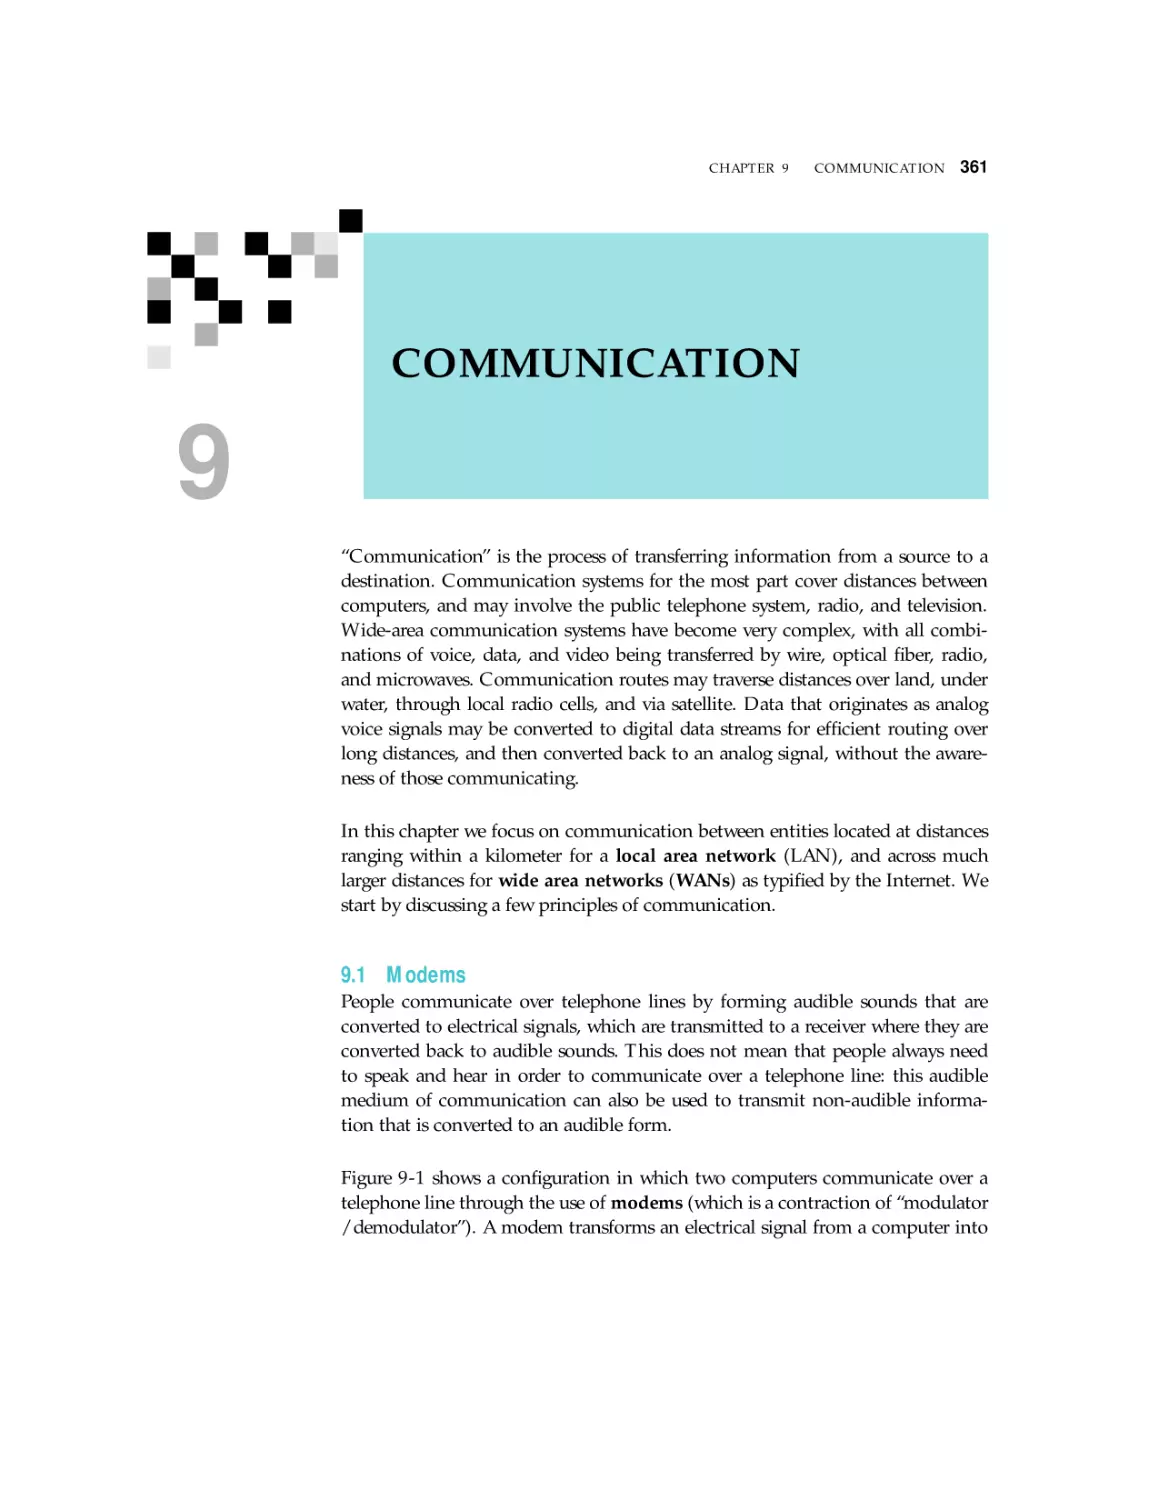 9. COMMUNICATION